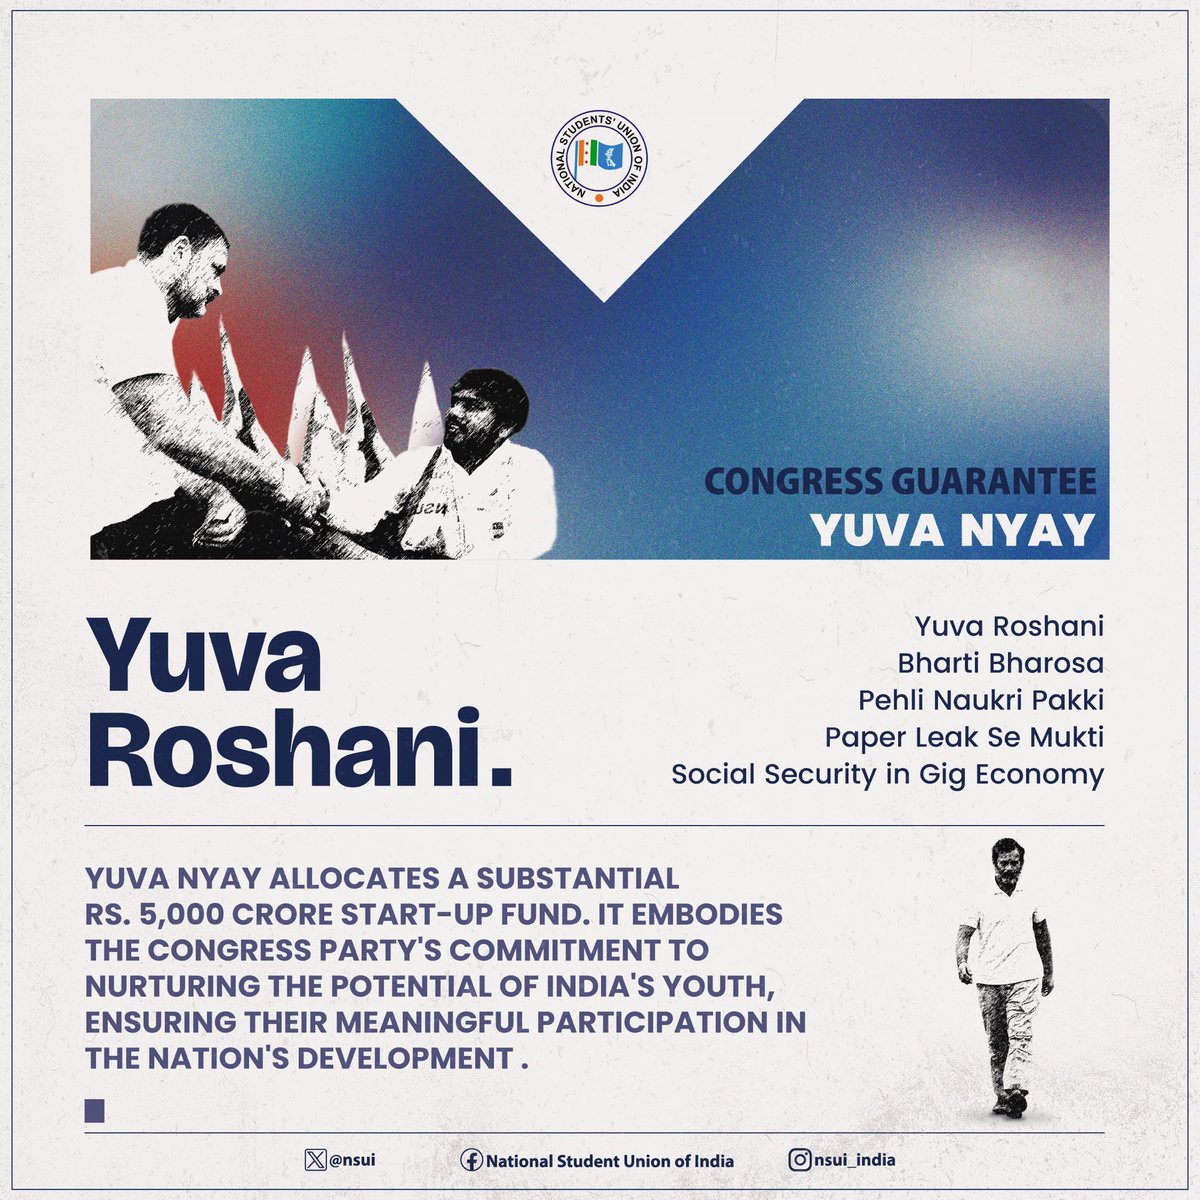 Yuva Nyay Patra ✨

Yuva Roshani 
Provides Rs. 5,000 Crores Startup Fund 

#YuvaNyay